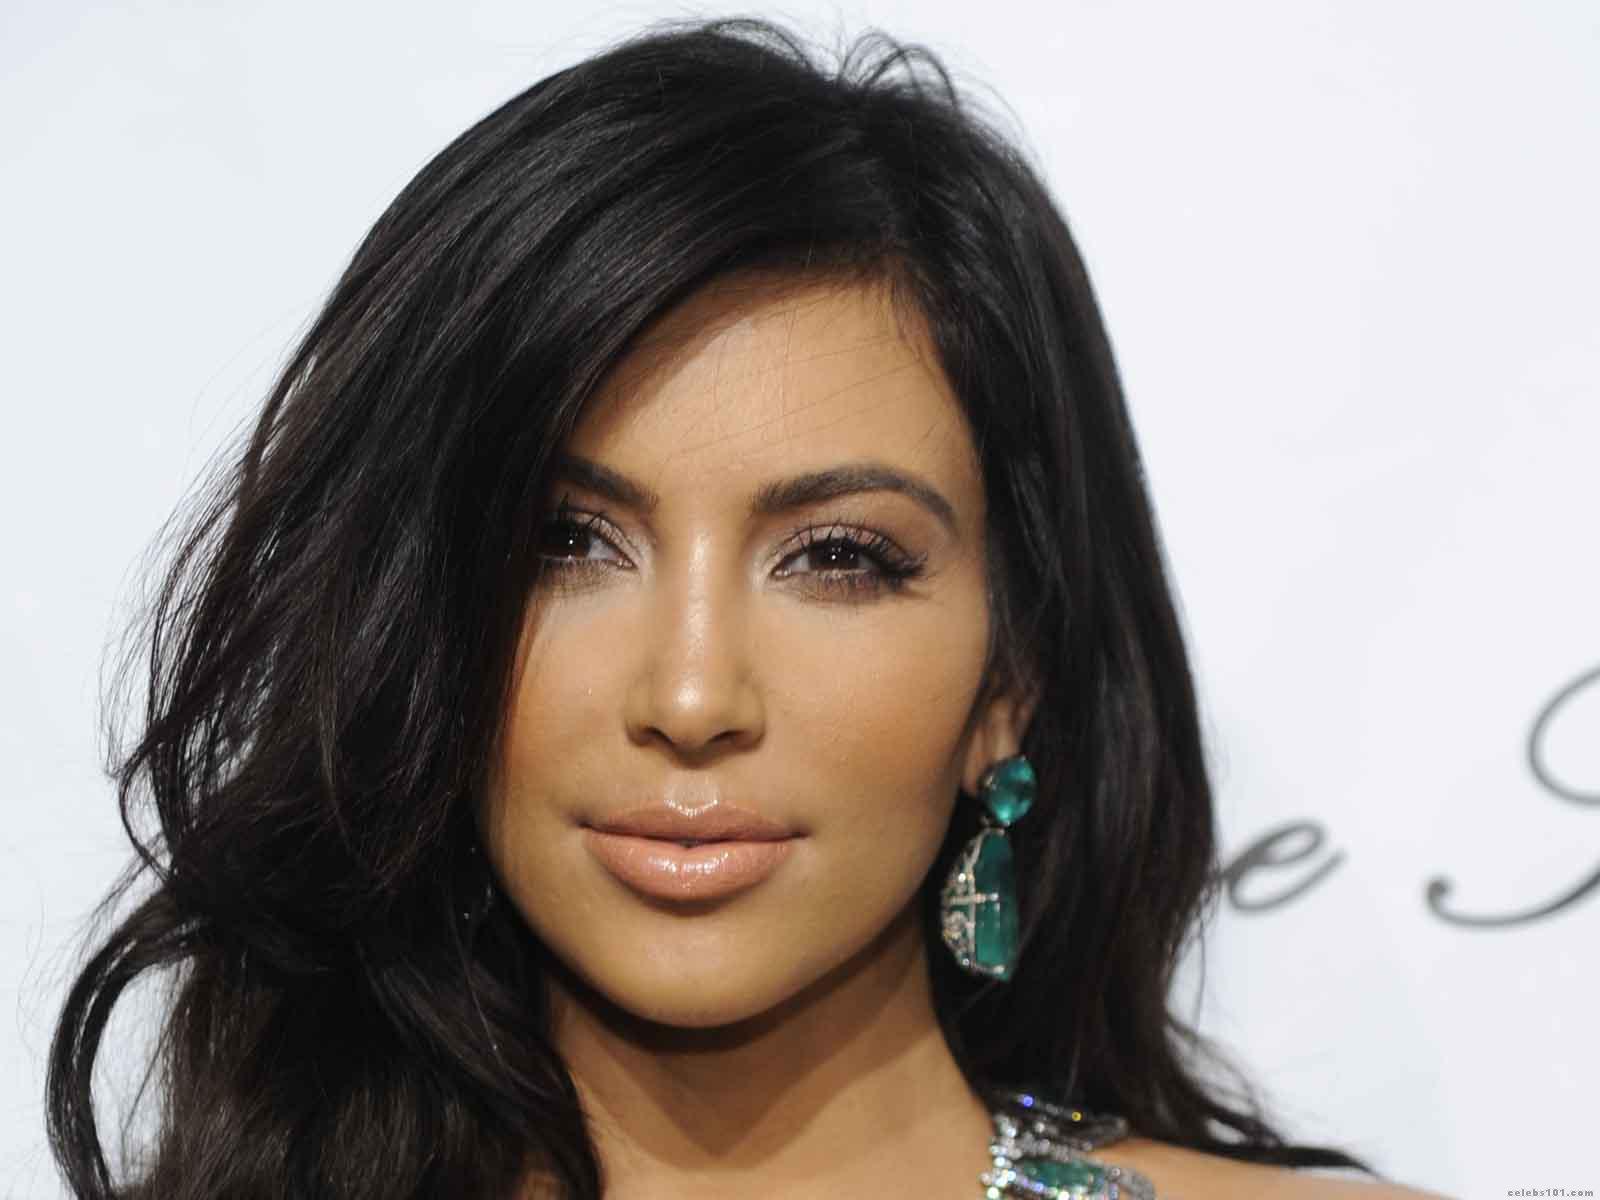 [73+] Kim Kardashian Hd Wallpapers | WallpaperSafari